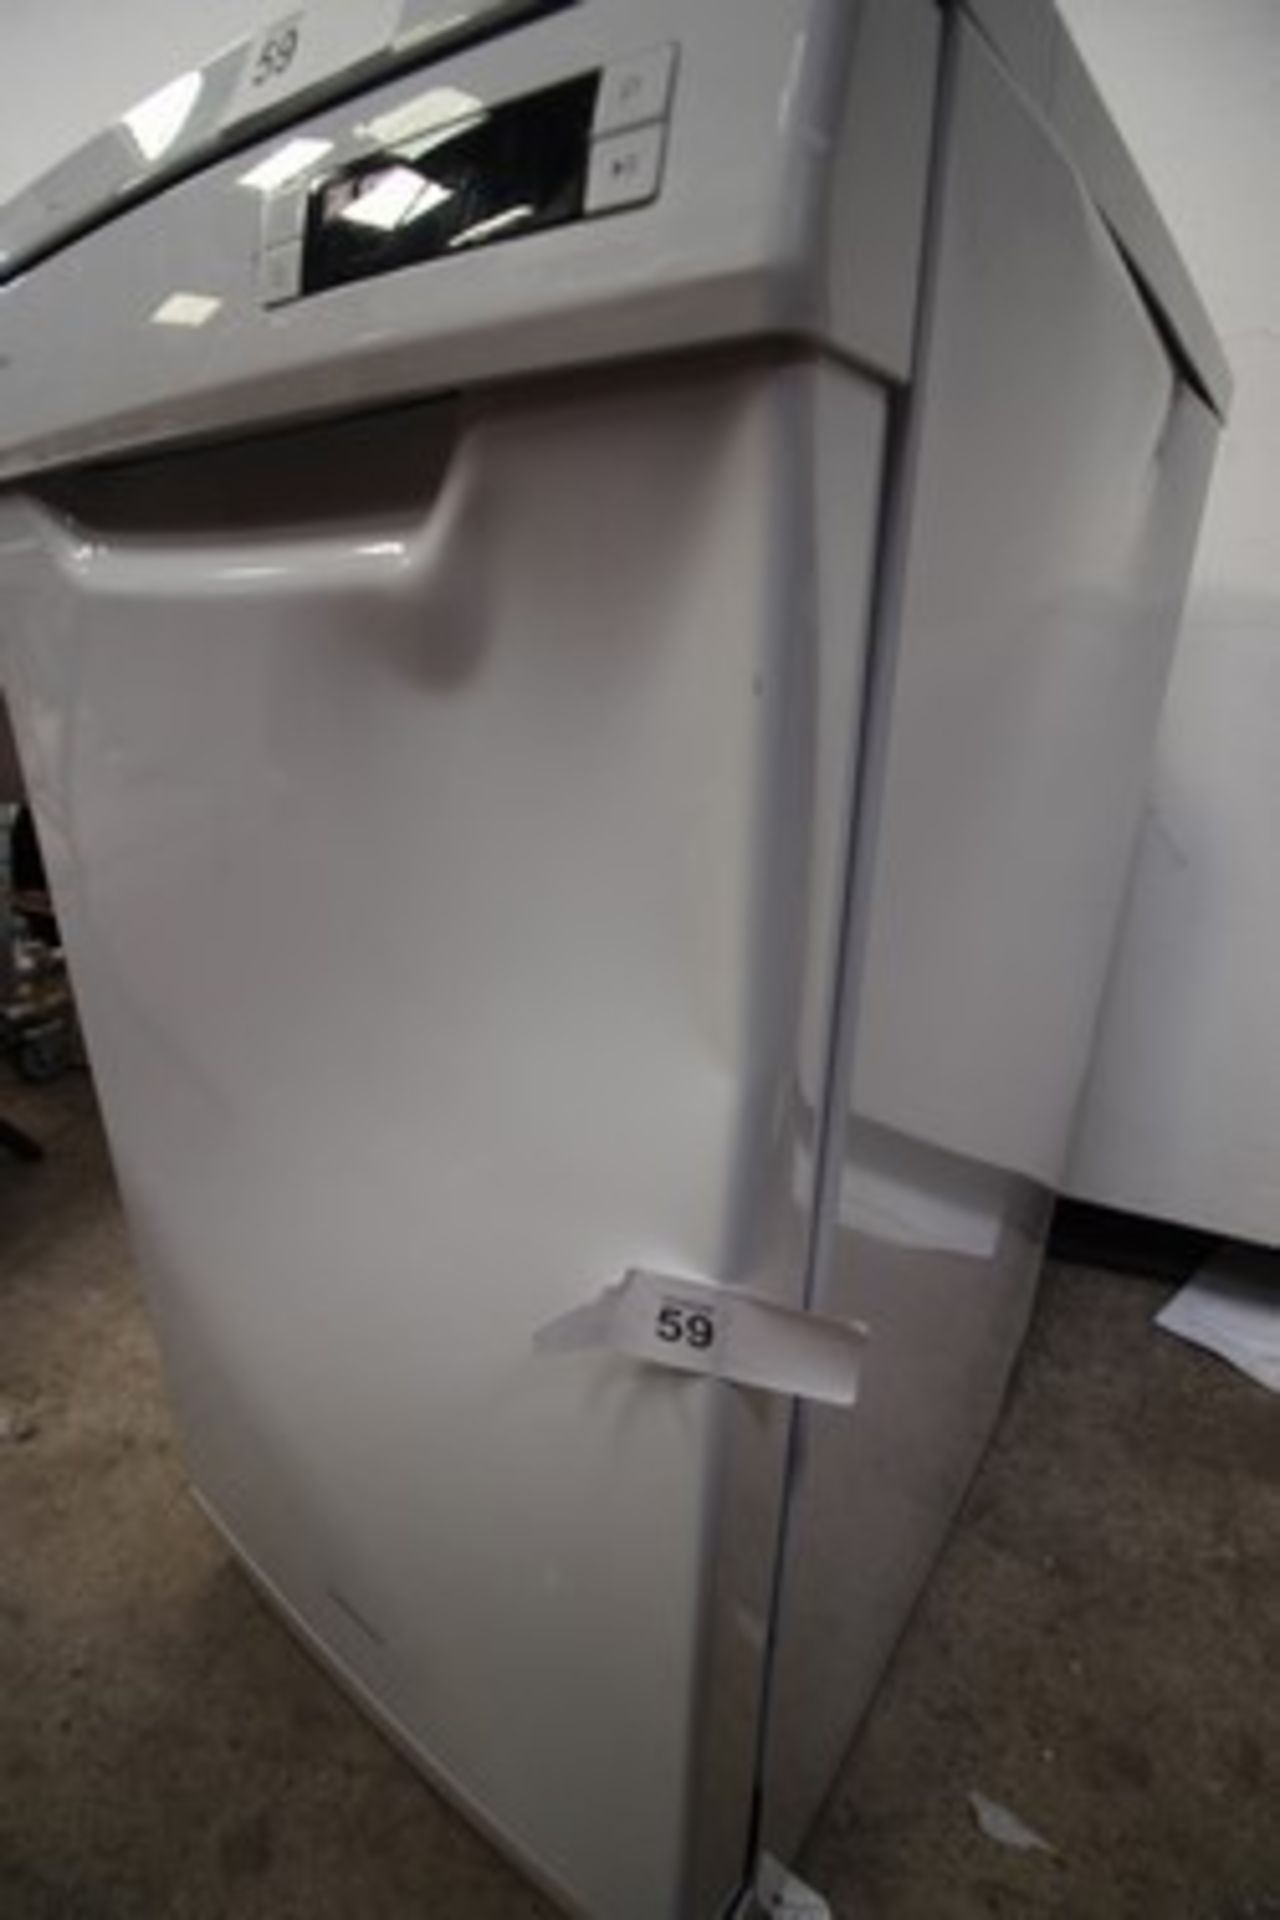 1 x Statesman 45cm slimline 10 place dishwasher, damaged in transit, dented front door, cracked top, - Image 3 of 3